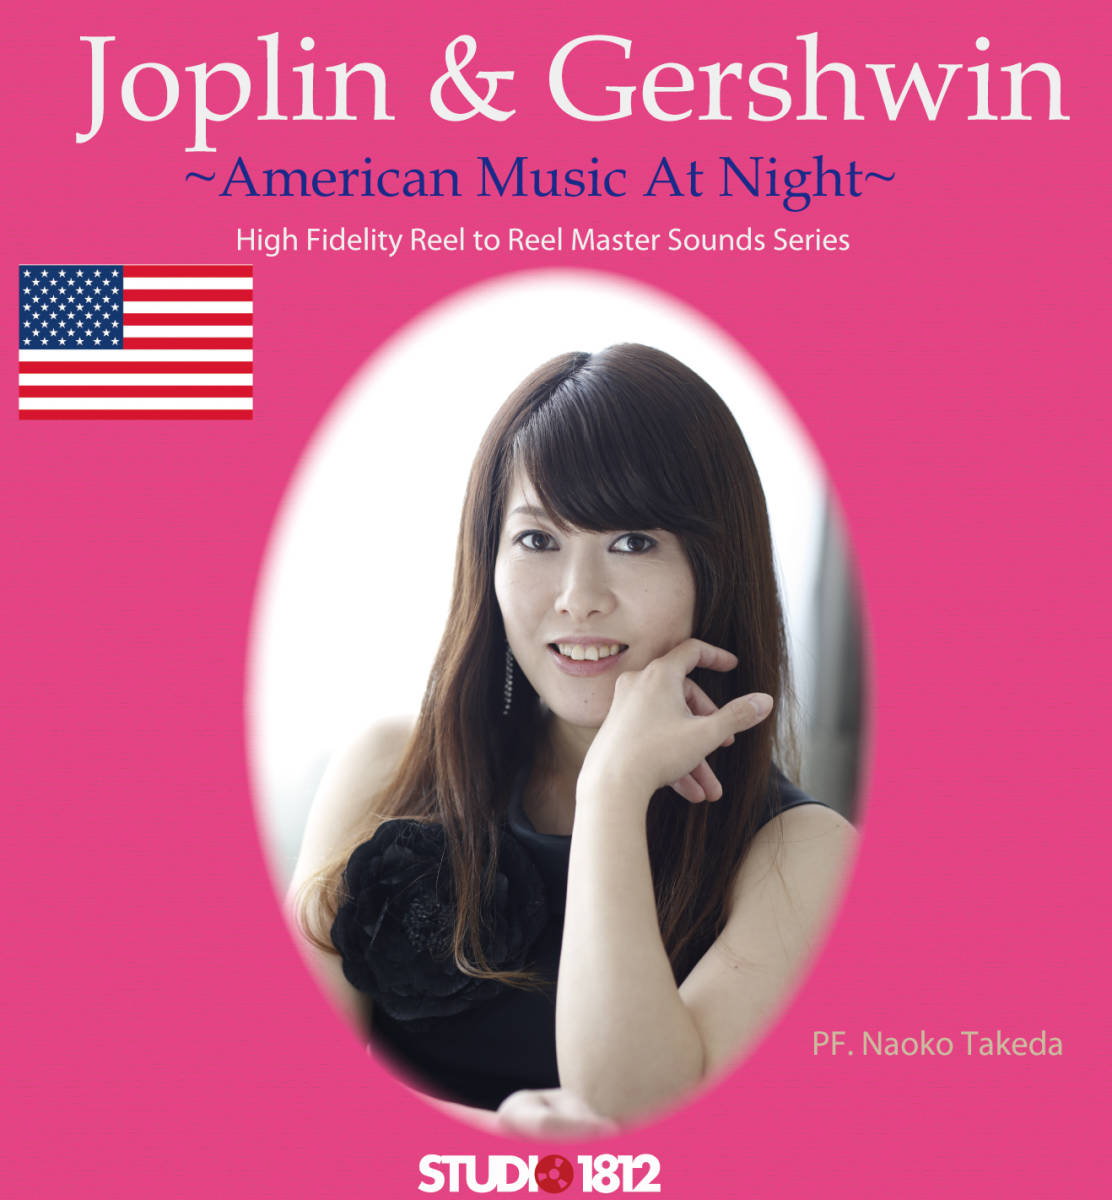 4Tr19Cm　Joplin & Gershwin ピアノミュージックテープアルバム_画像4